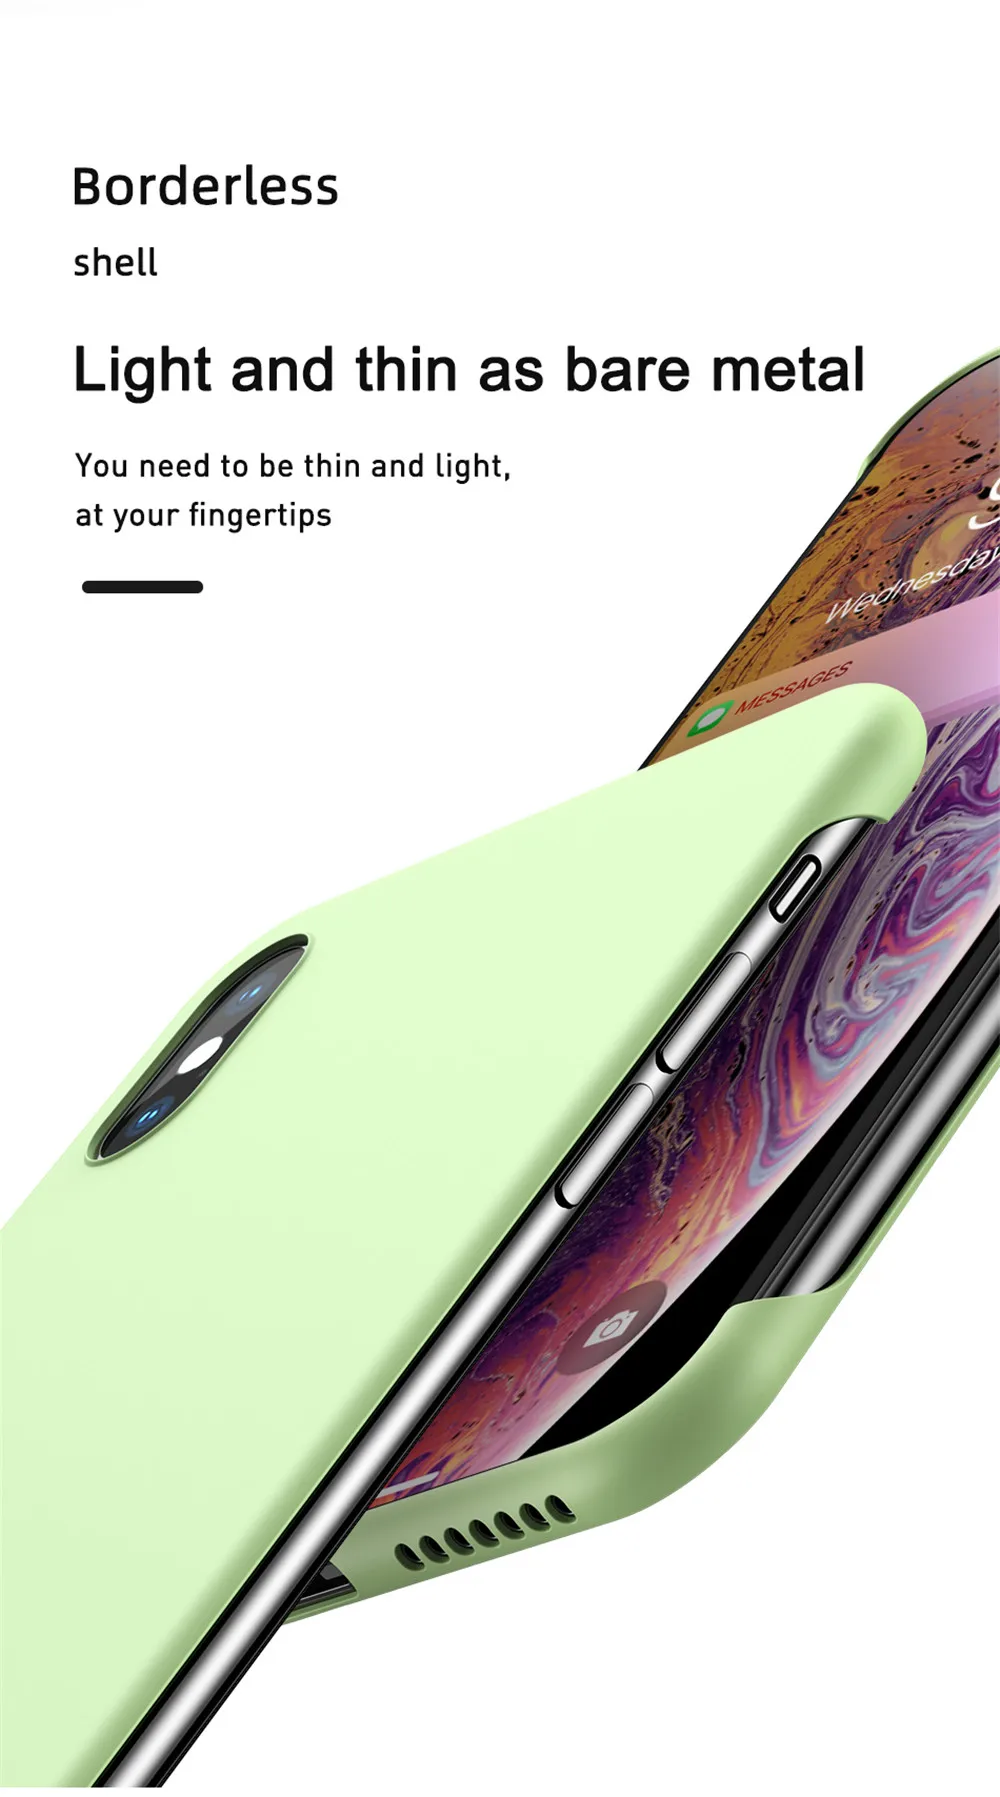 Lovebay чехол для телефона для iPhone 6, 6s, 7, 8 Plus, X, XR, XS Max, 11Pro, Max, яркие цвета, безрамный Жесткий ПК для iPhone 11, чехол-накладка